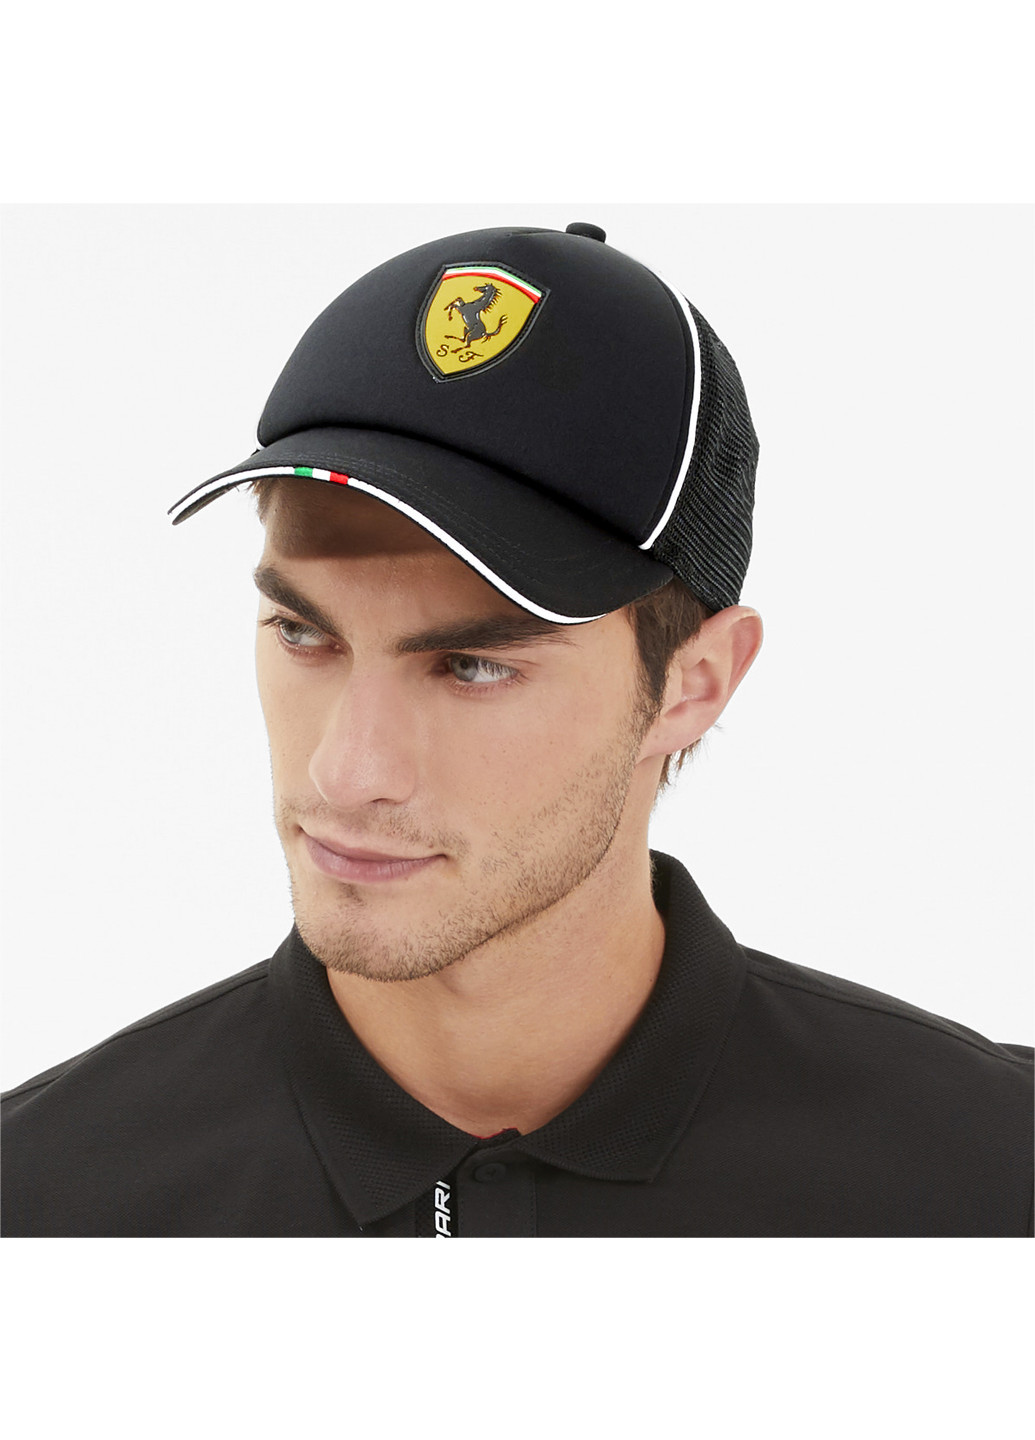 Кепка Ferrari Fanwear Trucker Cap Puma (207128243)